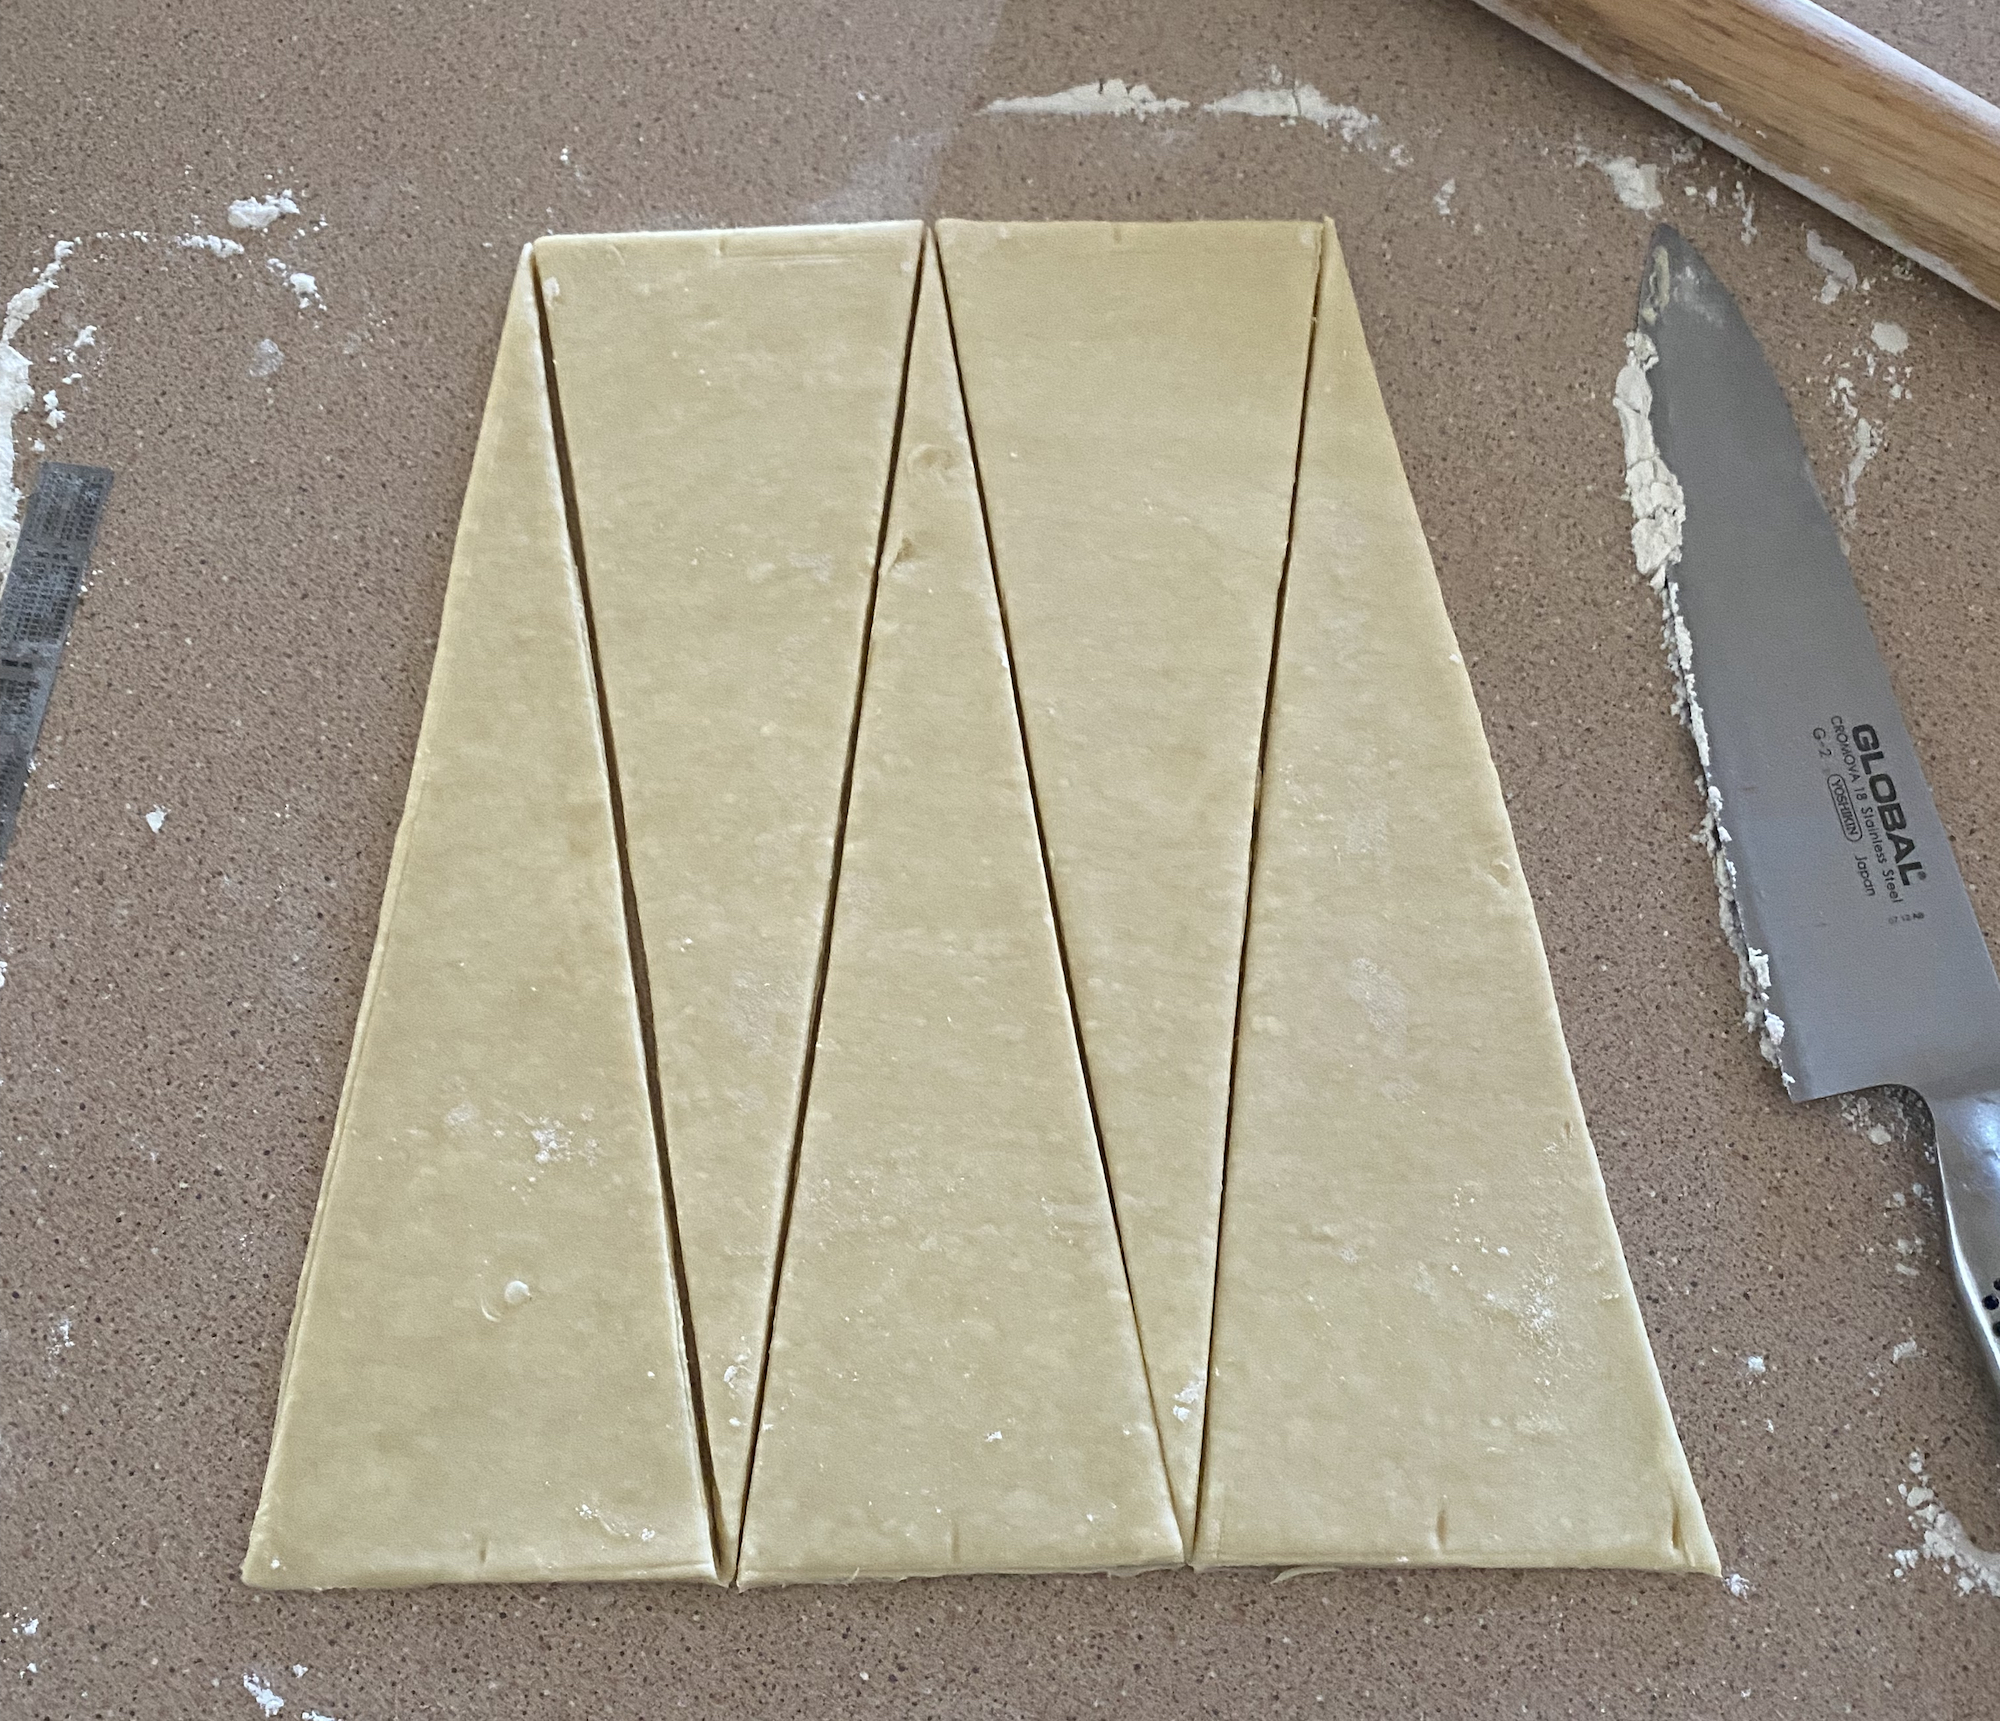 Second batch of dough cut